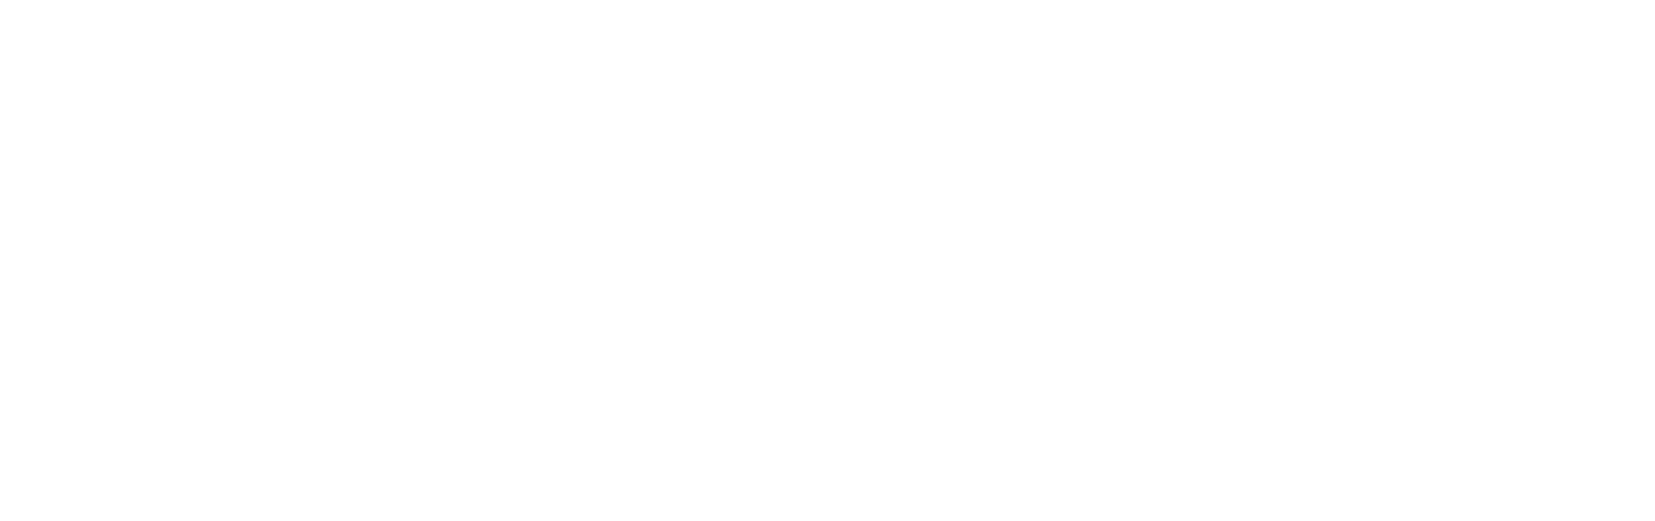 dermatology medical practice logo